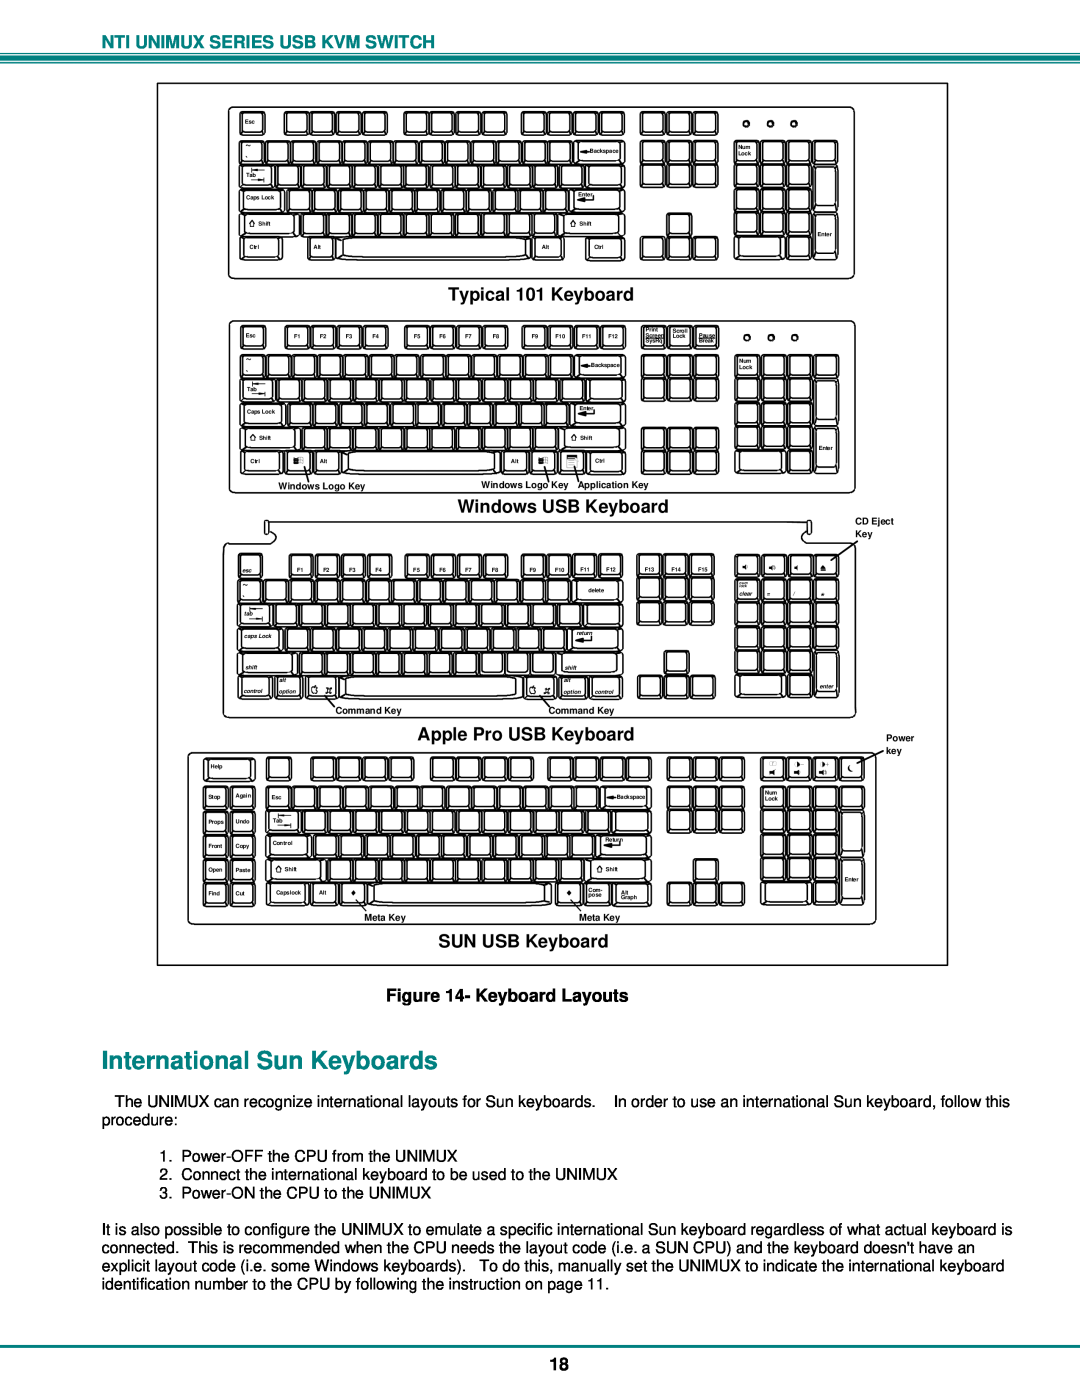 Network Technologies DVI-x International Sun Keyboards, Typical 101 Keyboard, SUN USB Keyboard, Windows USB Keyboard 